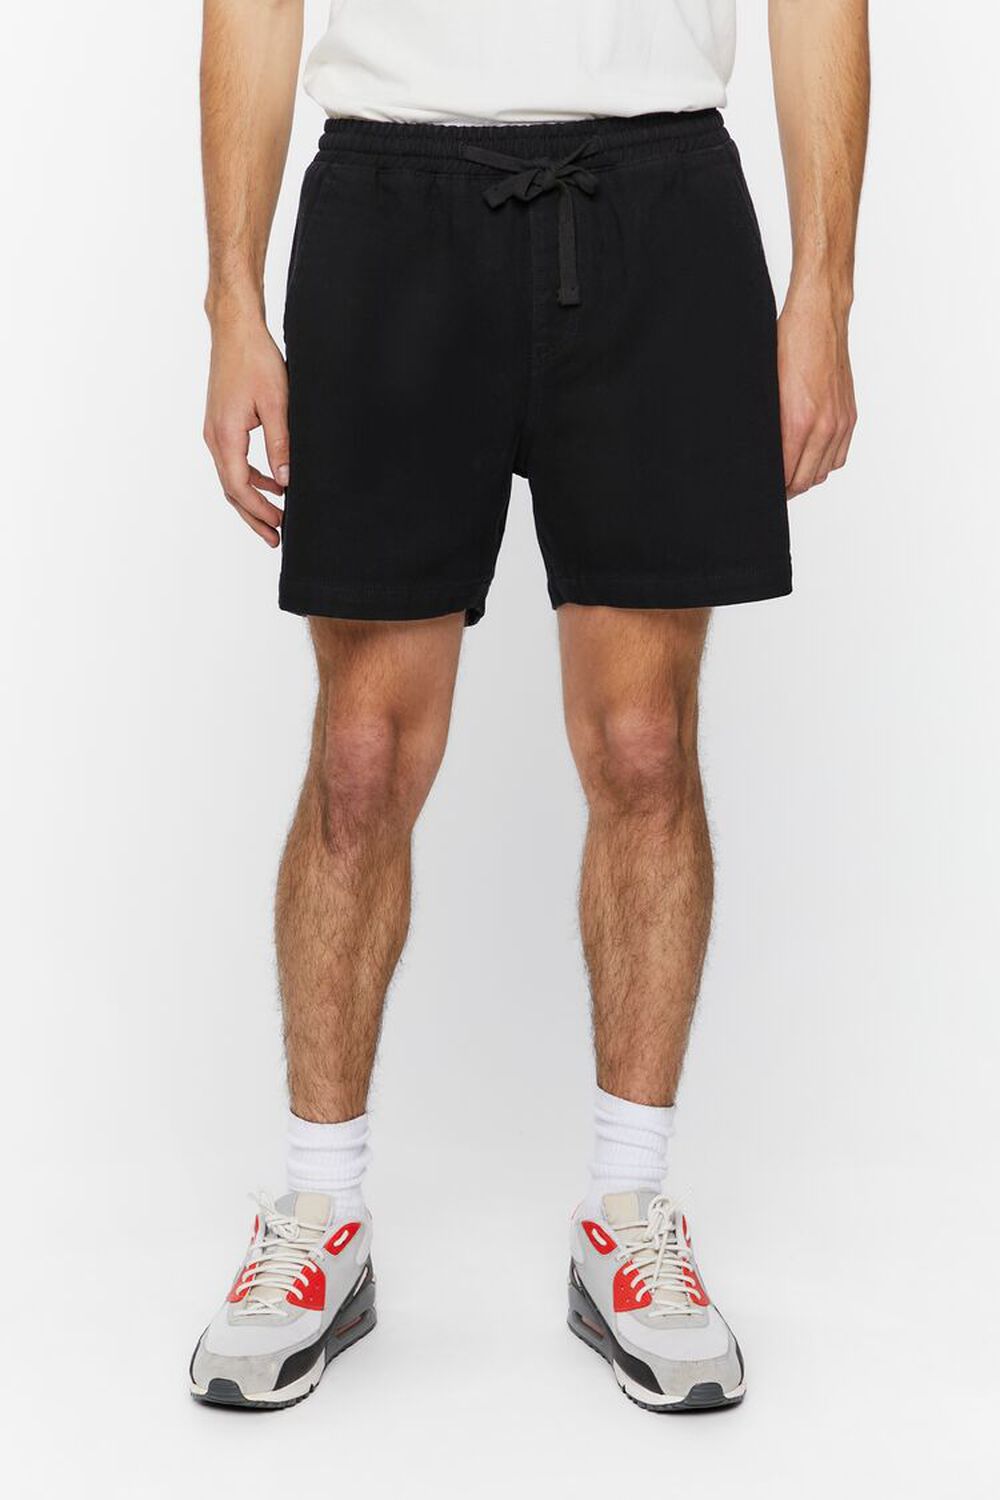 BLACK Drawstring Shorts, image 2